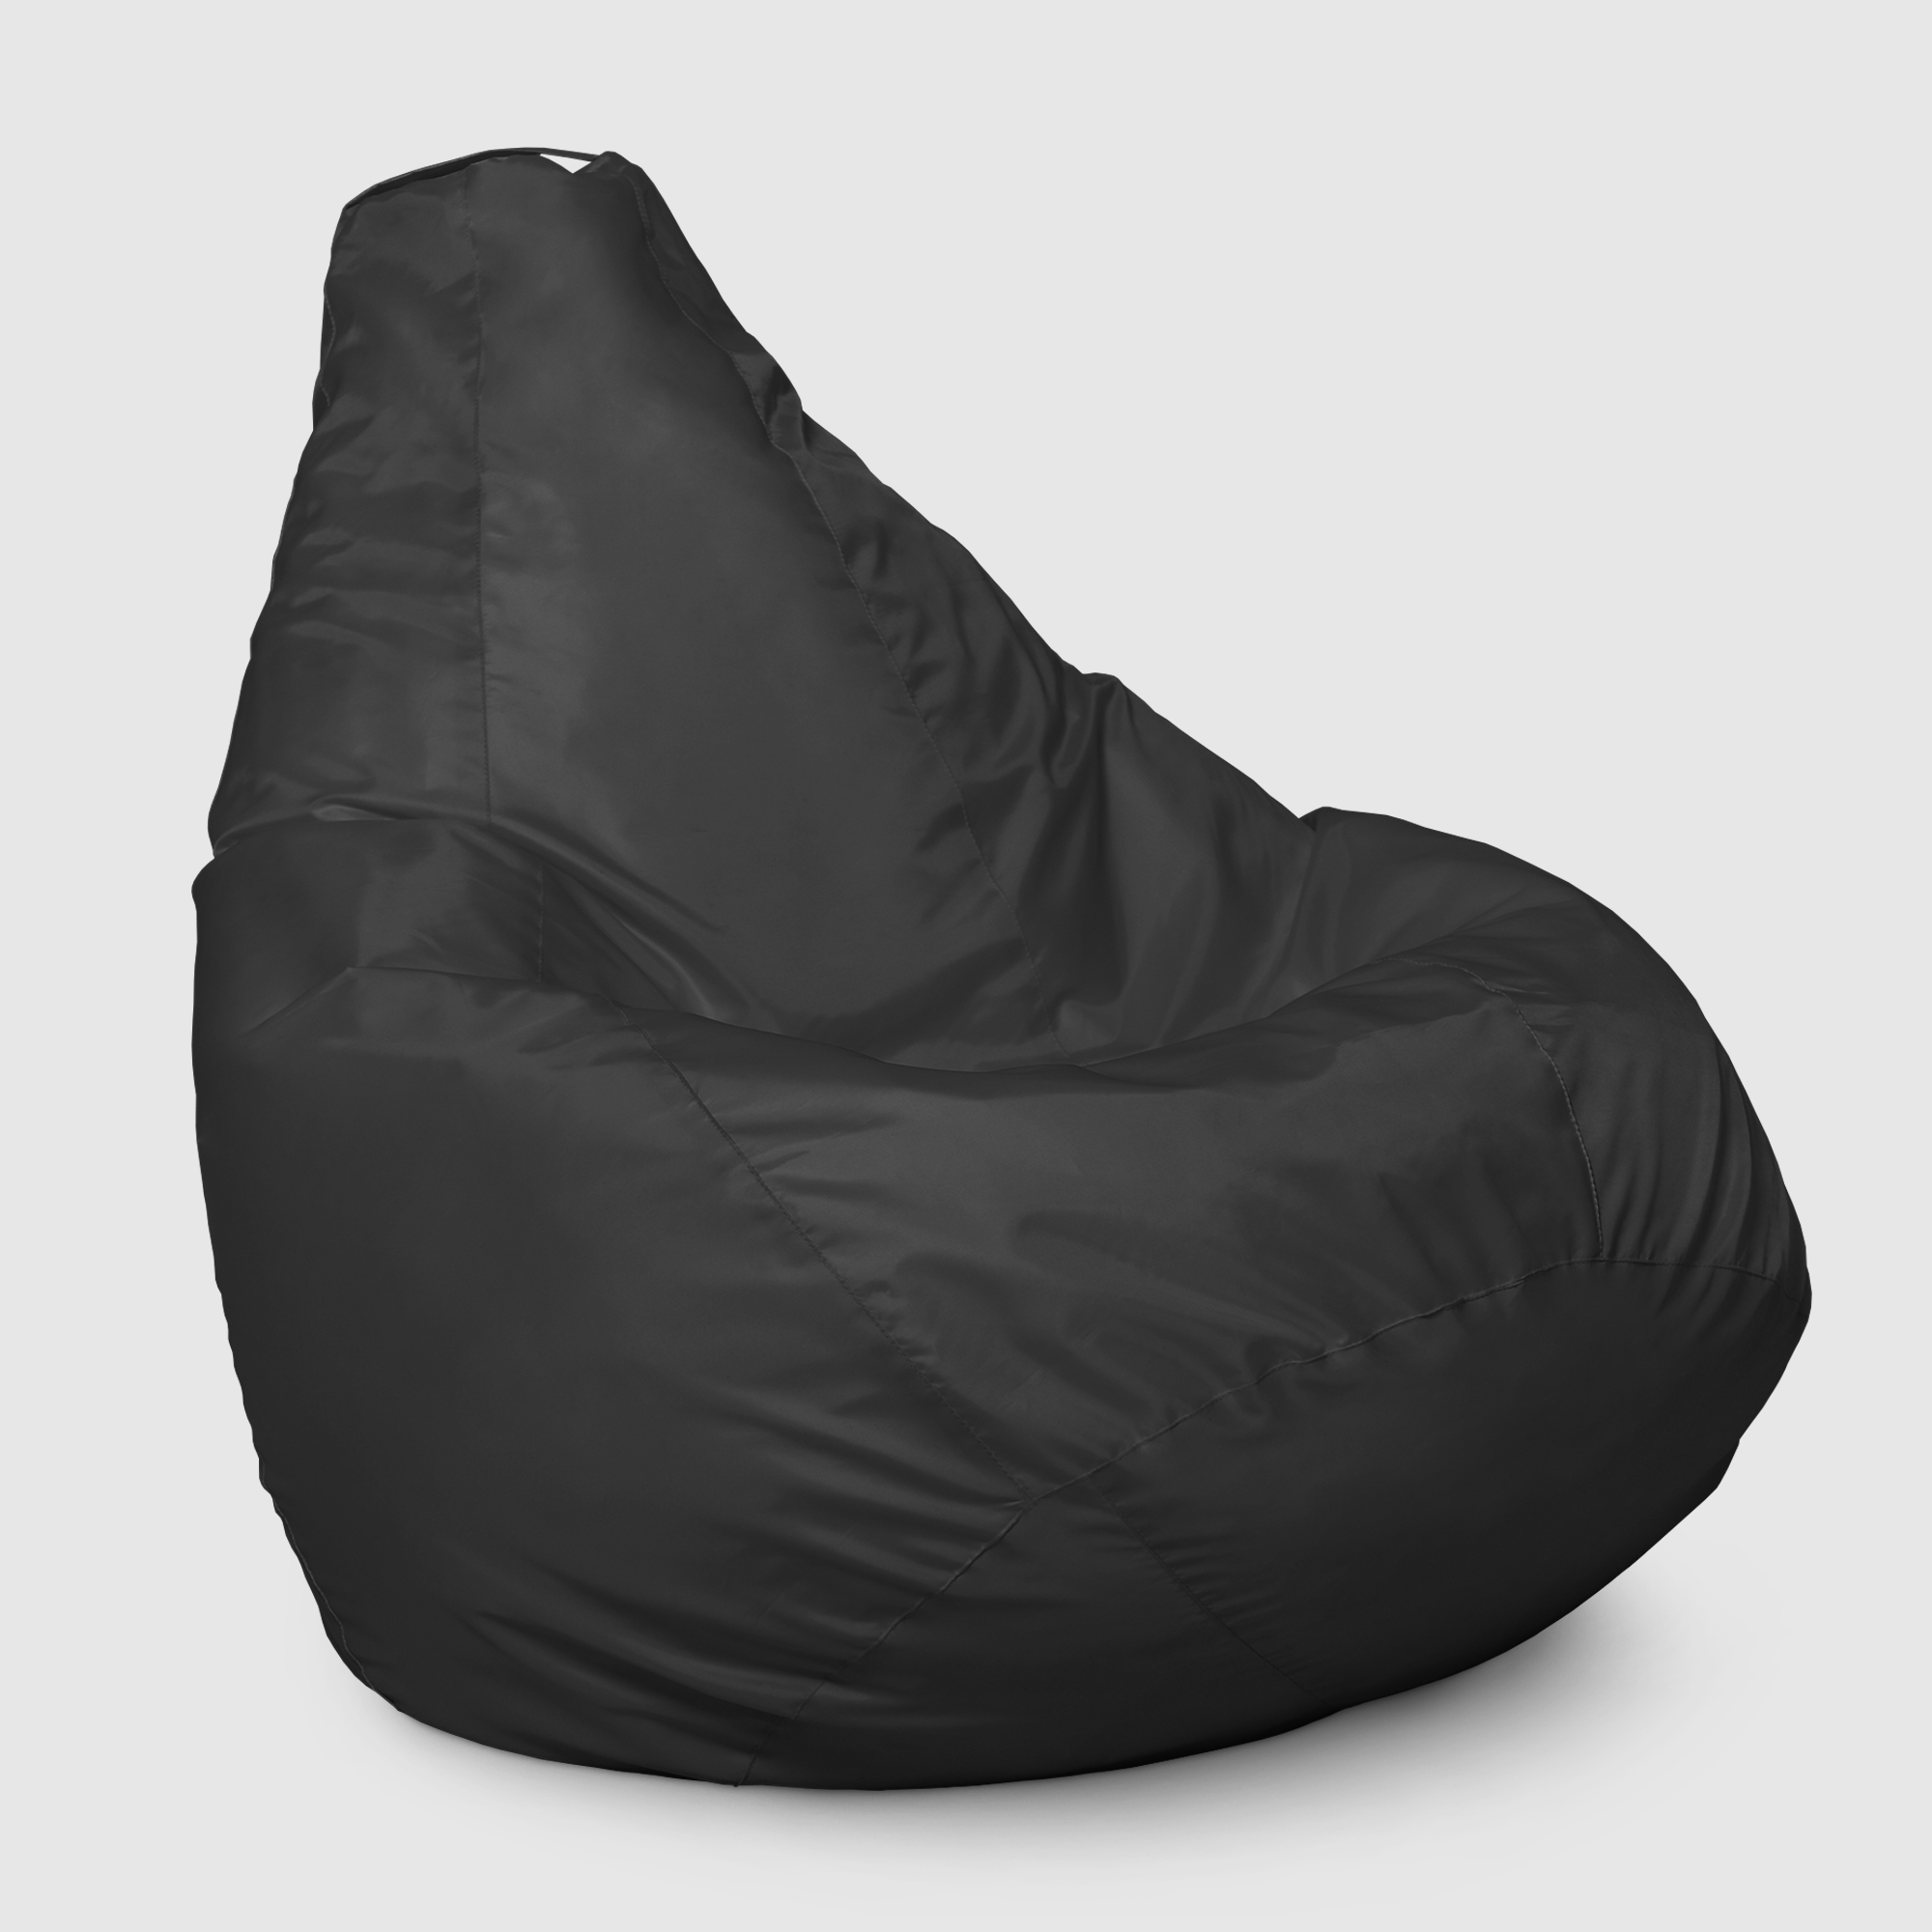 Кресло мешок Dreambag Меган xl черное 85х85х125 см кресло мешок dreambag меган xl лайм 85х85х125см